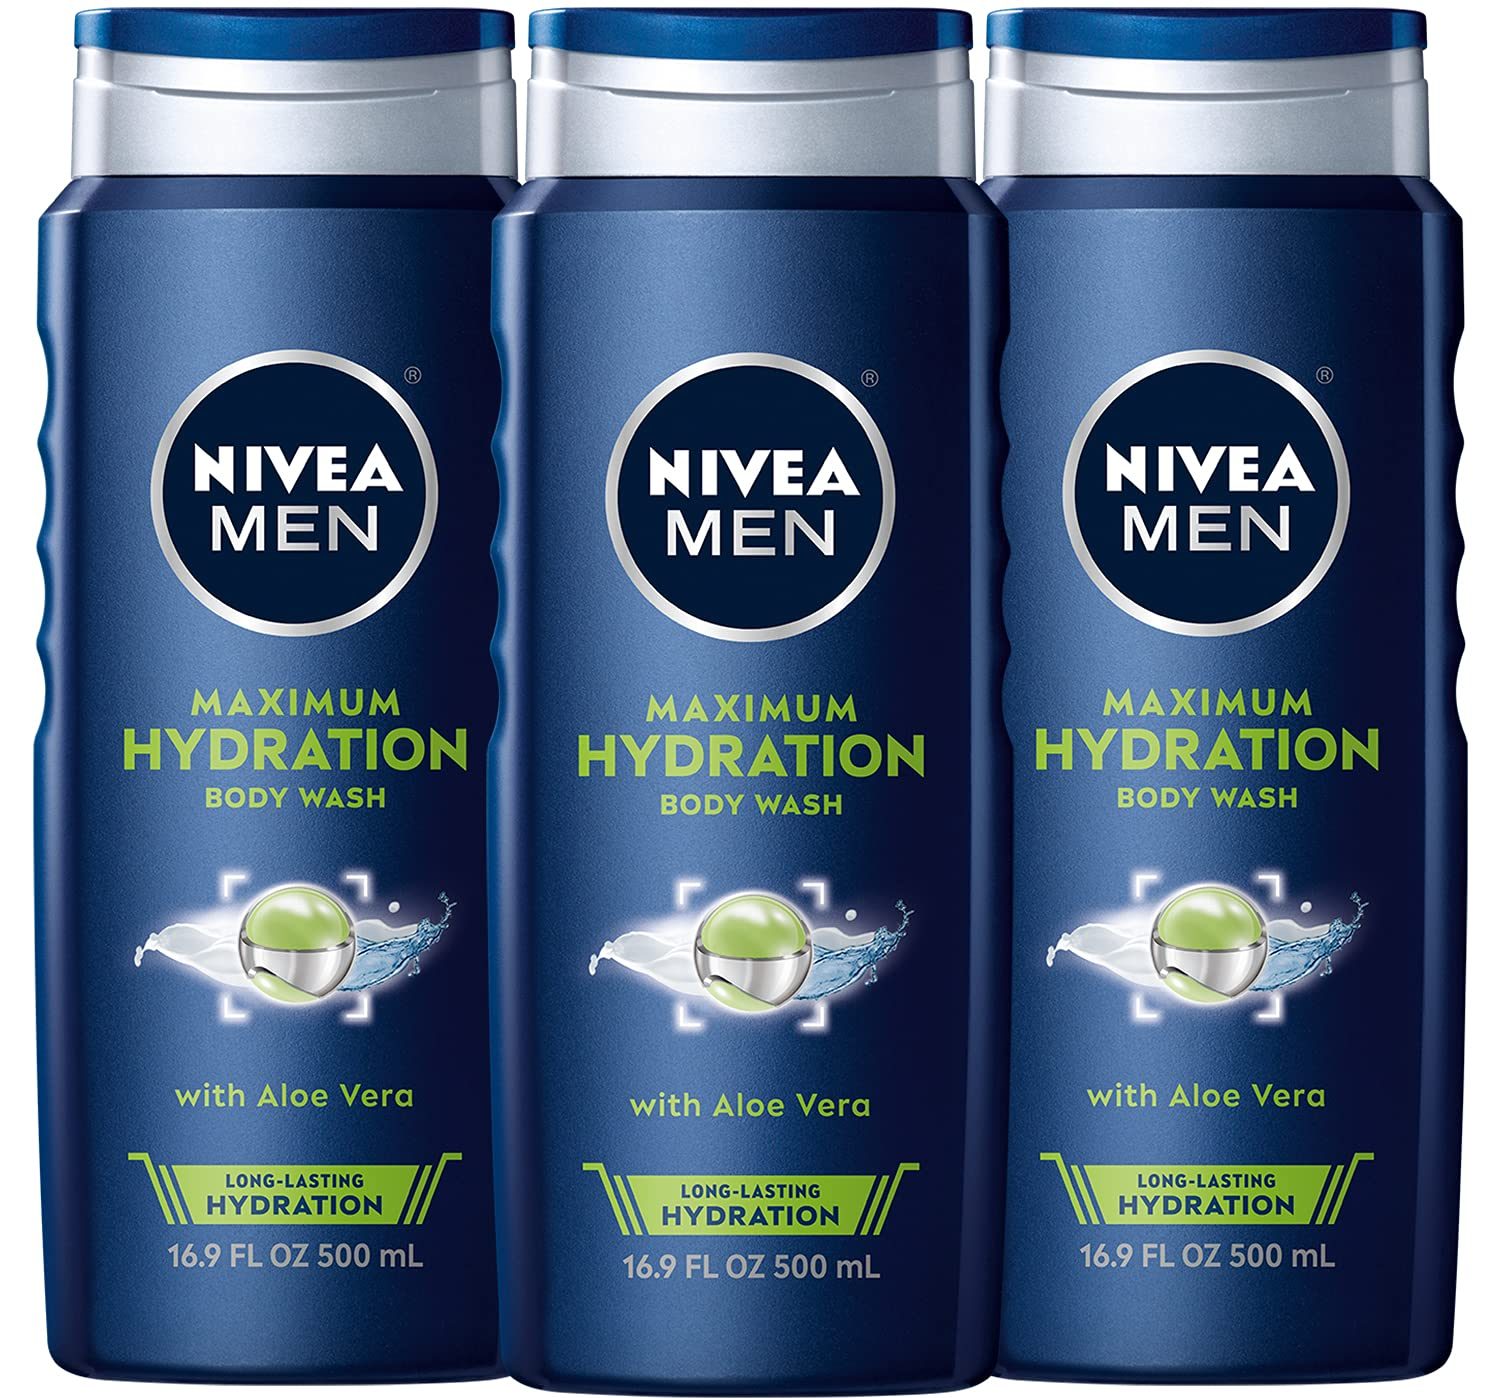 NIVEA Men Maximum Hydration 3 in 1 Body Wash bottles